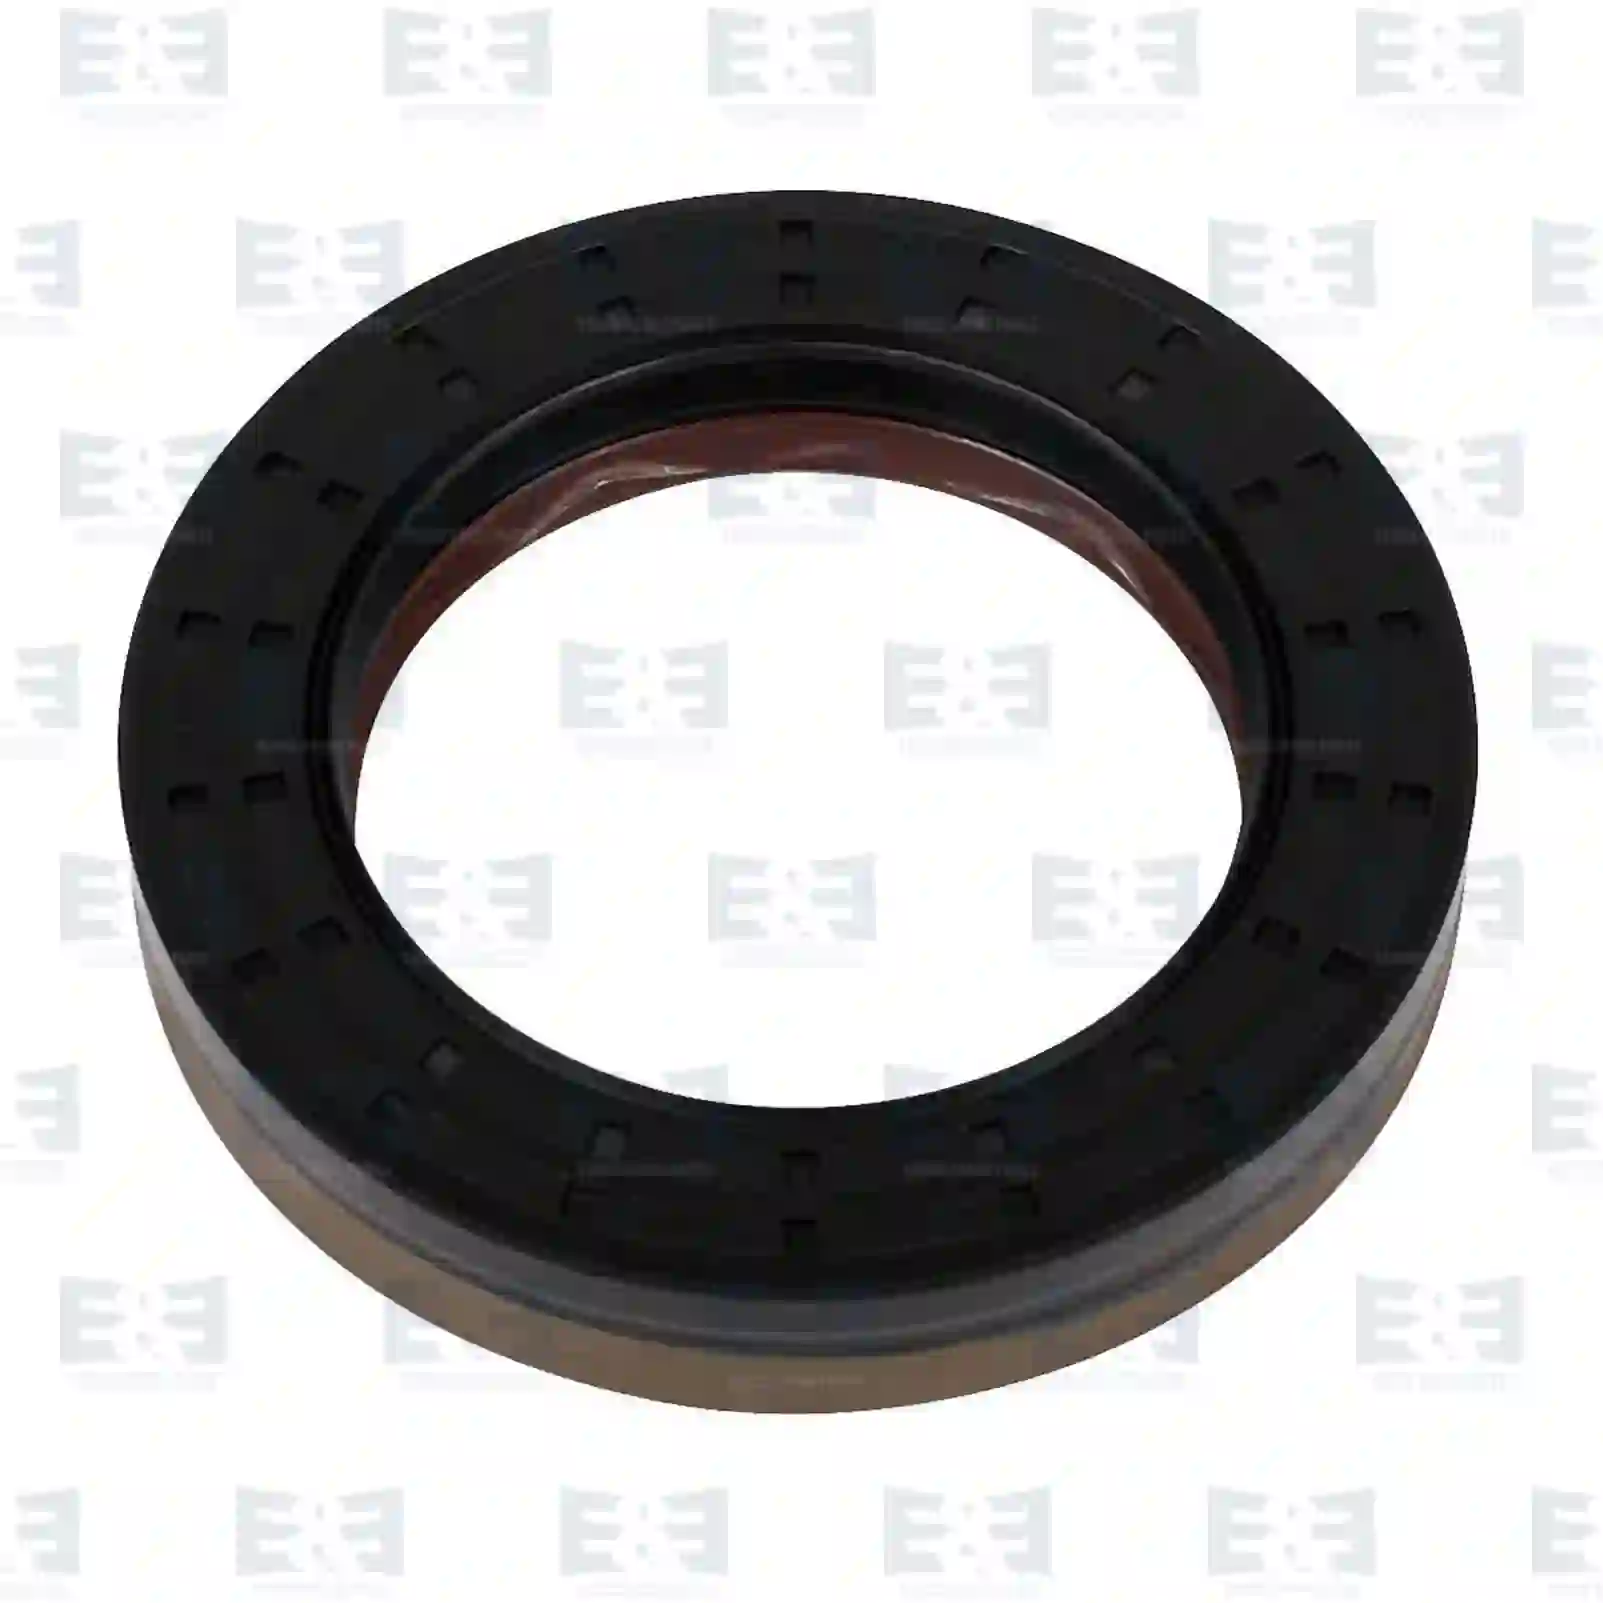  Oil seal || E&E Truck Spare Parts | Truck Spare Parts, Auotomotive Spare Parts